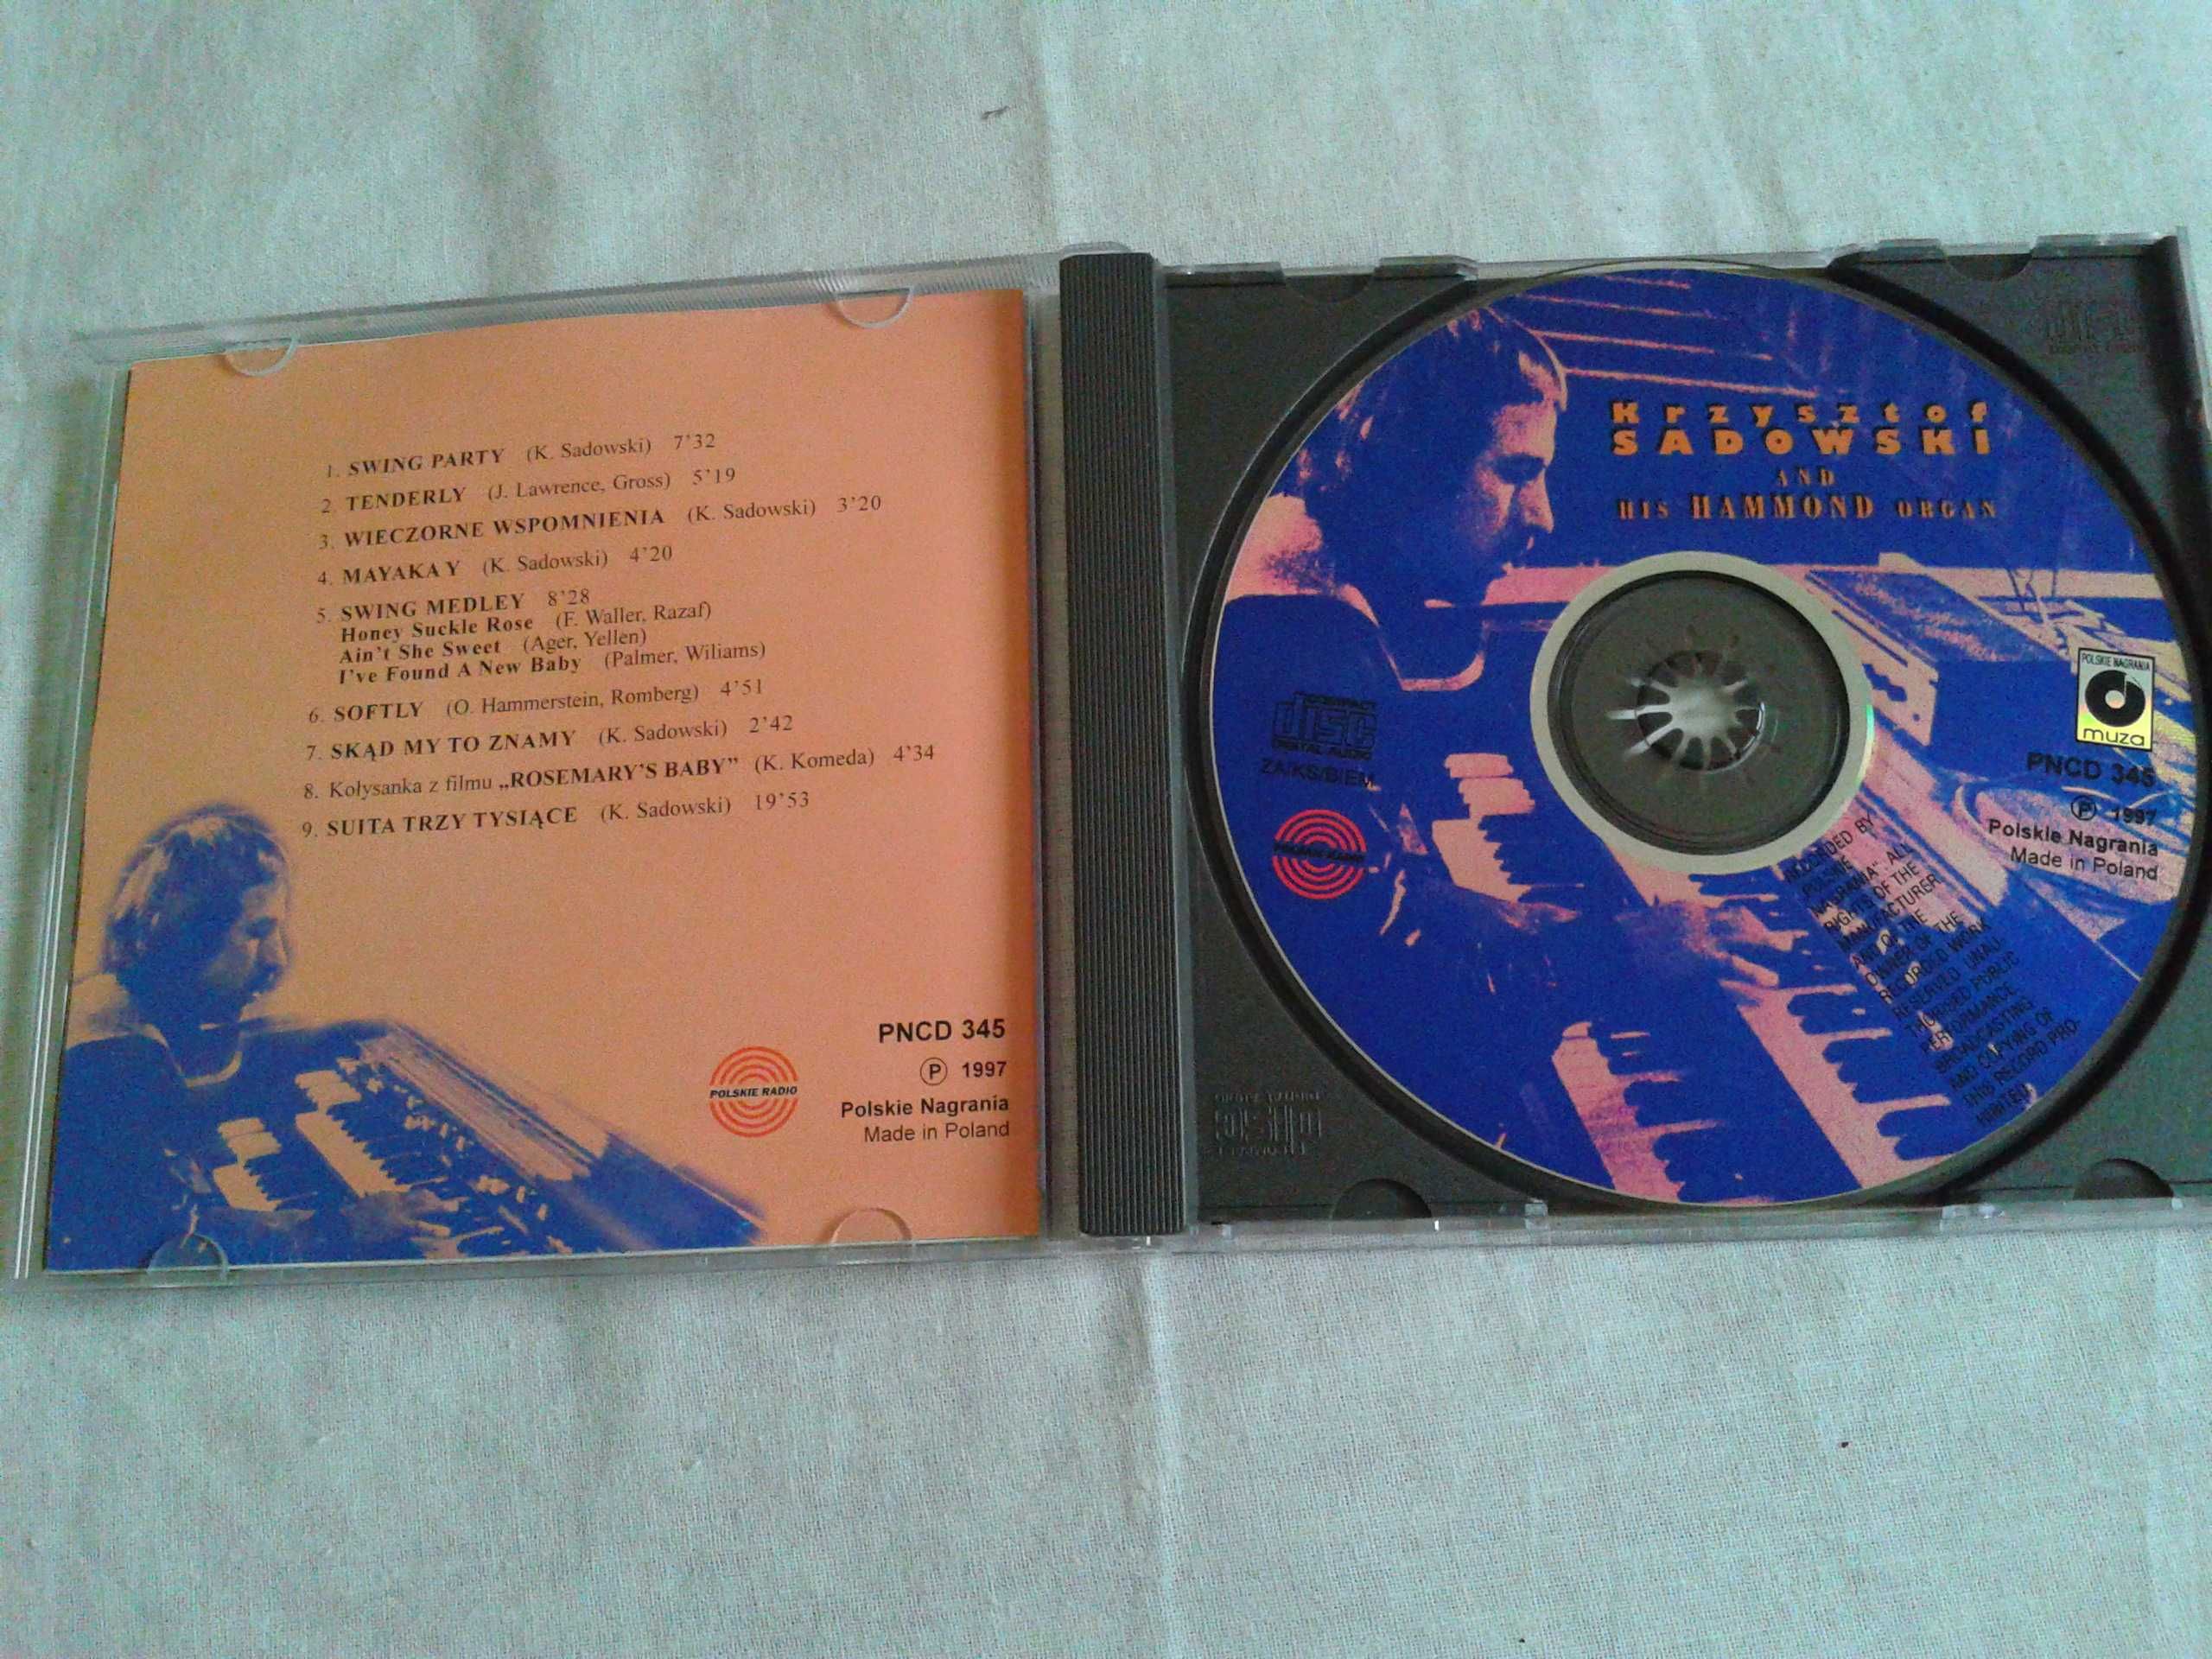 Krzysztof Sadowski - and His Hammond Organ  CD